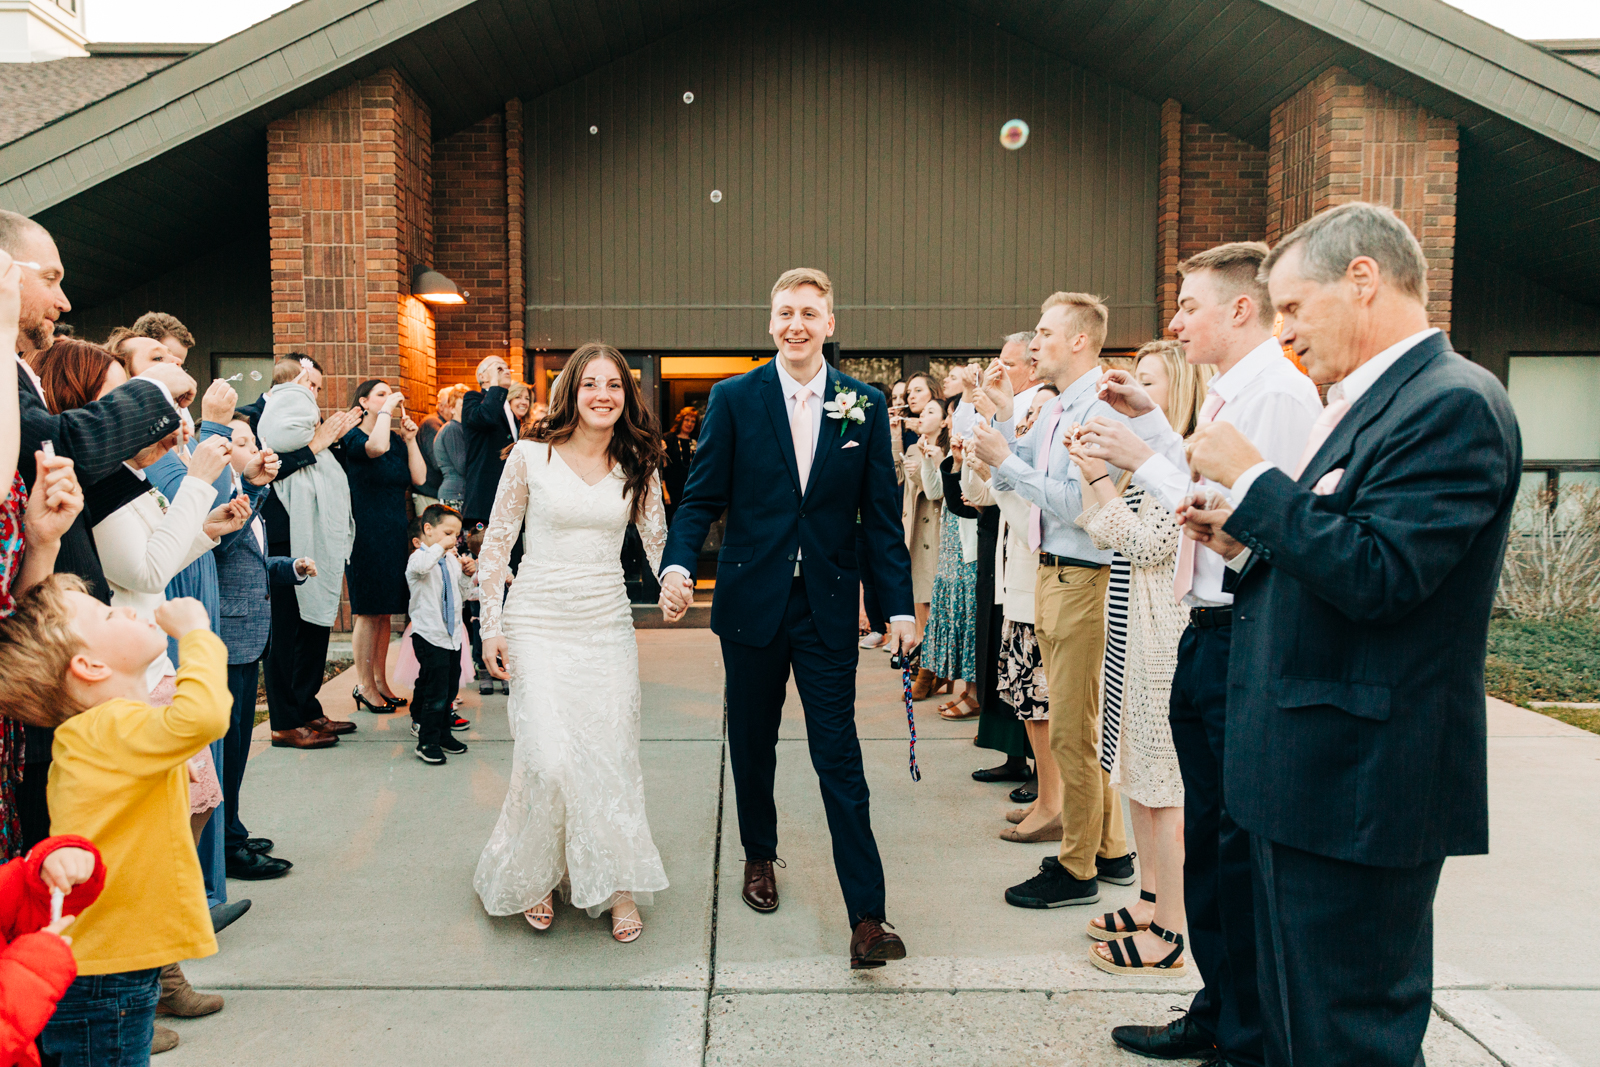 Jackson Hole wedding photographer captures bride and groom leaving reception